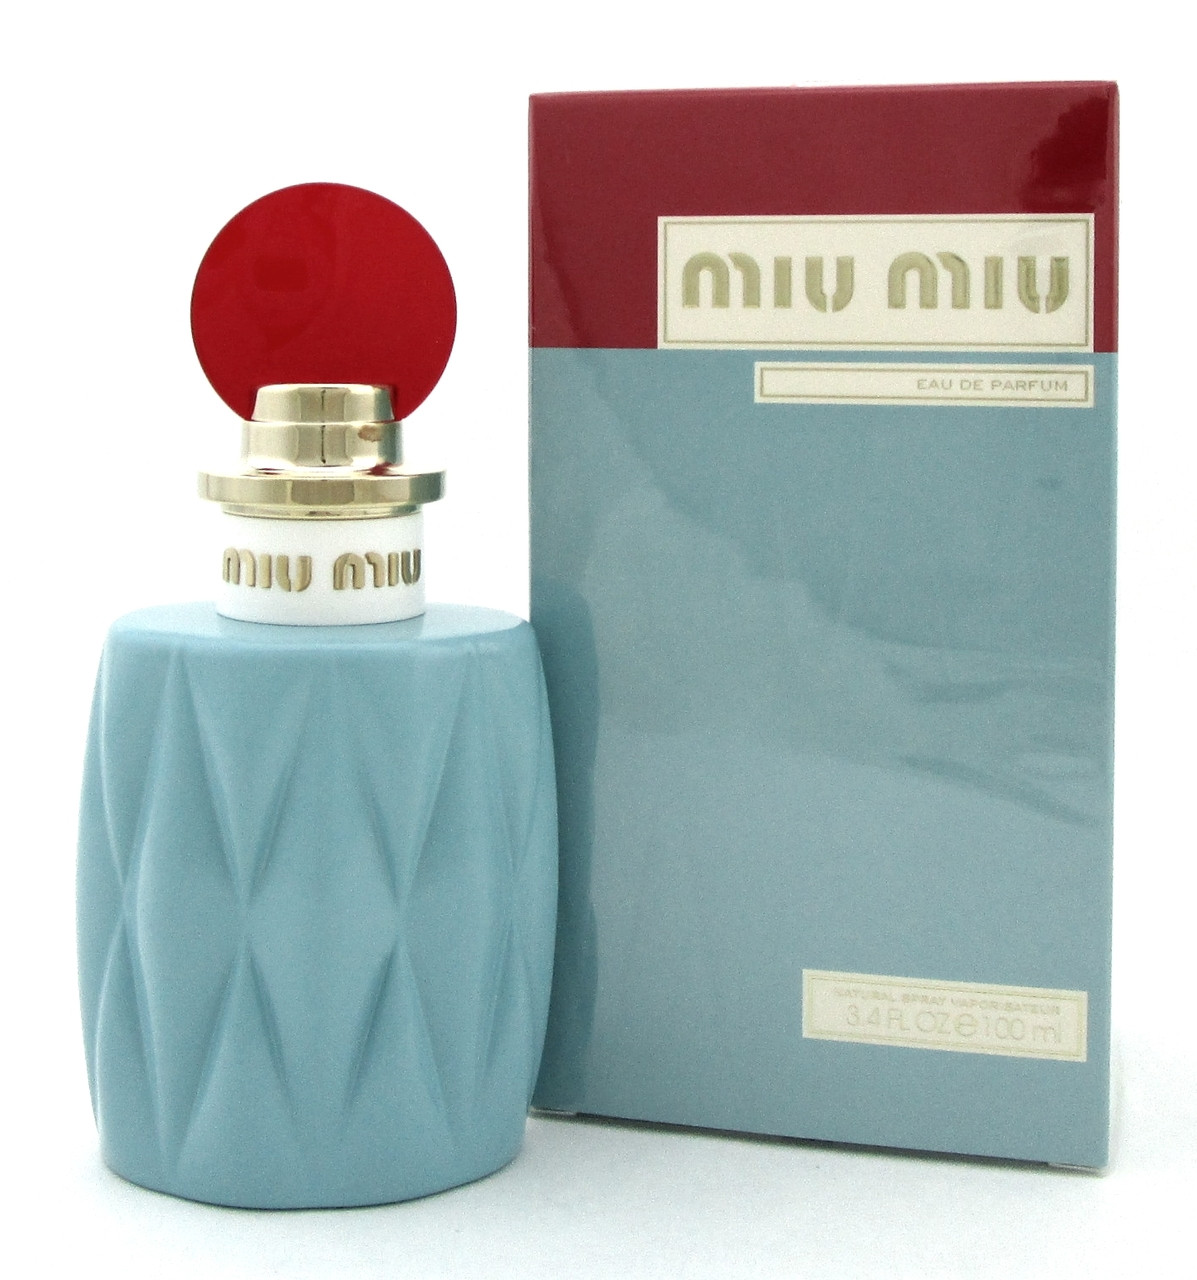 Miu Miu Perfume by Miu Miu 3.4 oz. Eau de Parfum Spray for Women. New